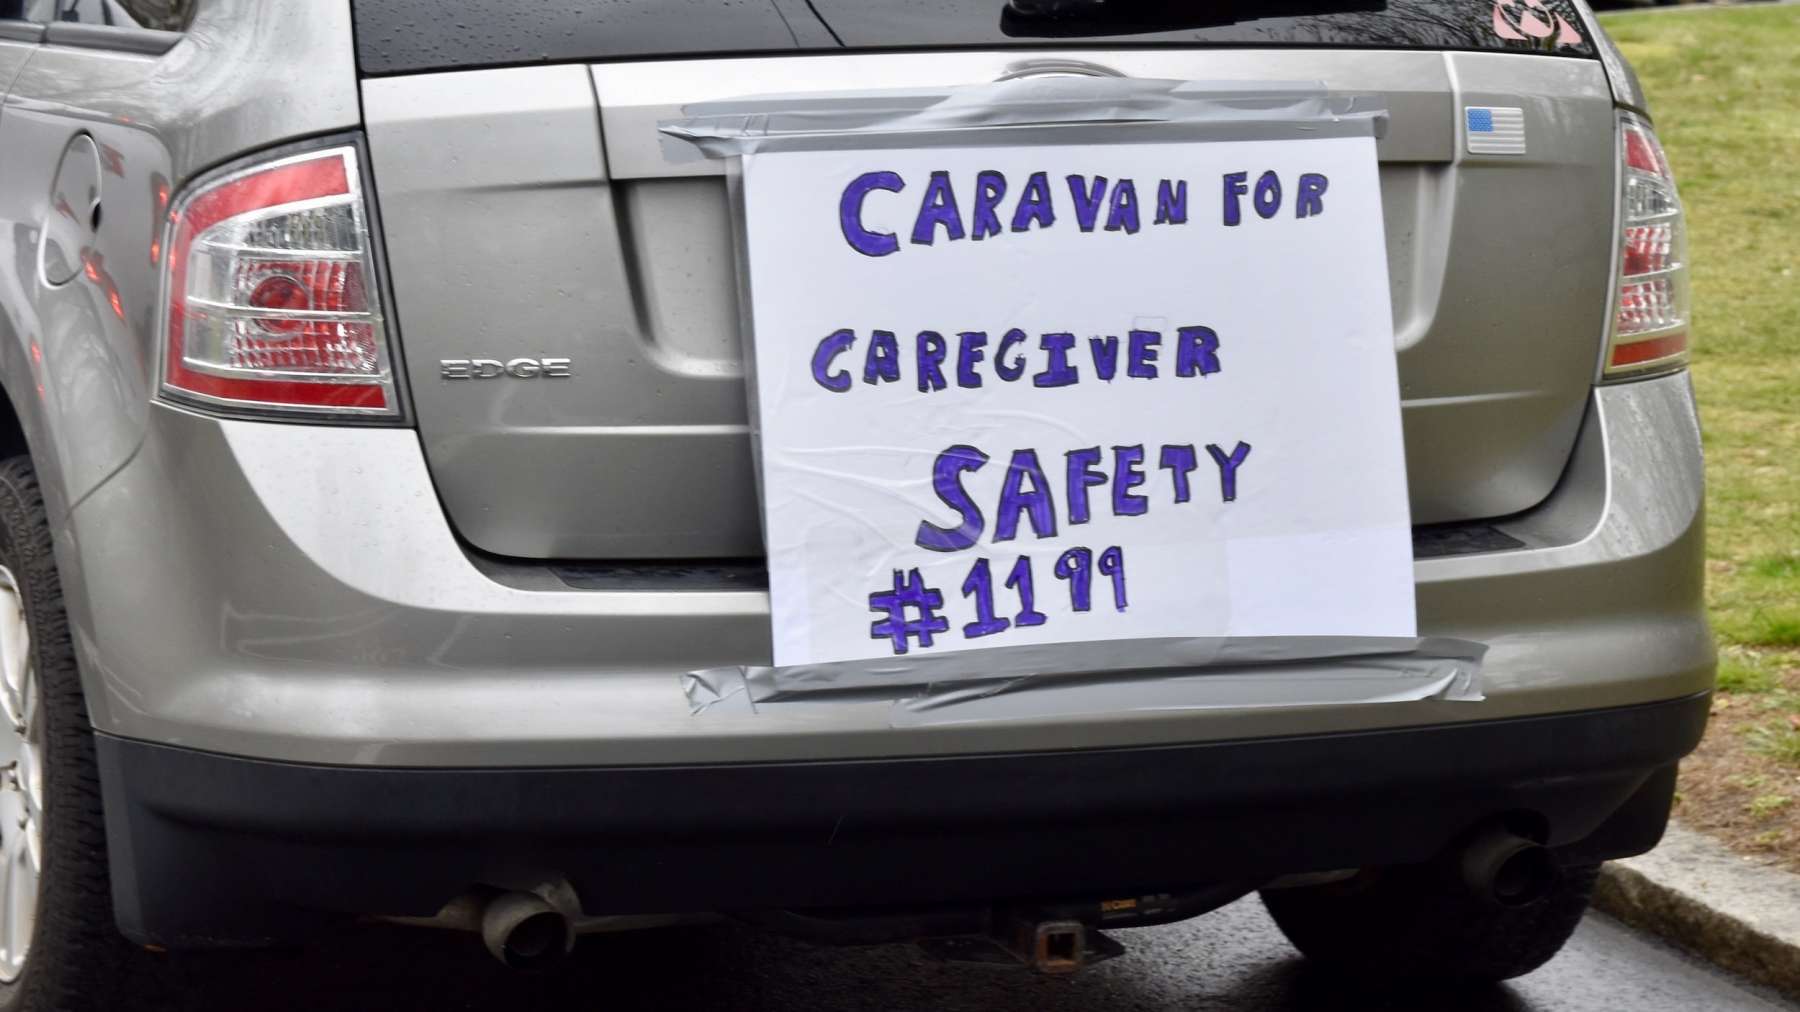 Rhode Island News: Charlesgate Nursing Center workers win $10/hour hazard pay; Caravan turns to Dept of Health